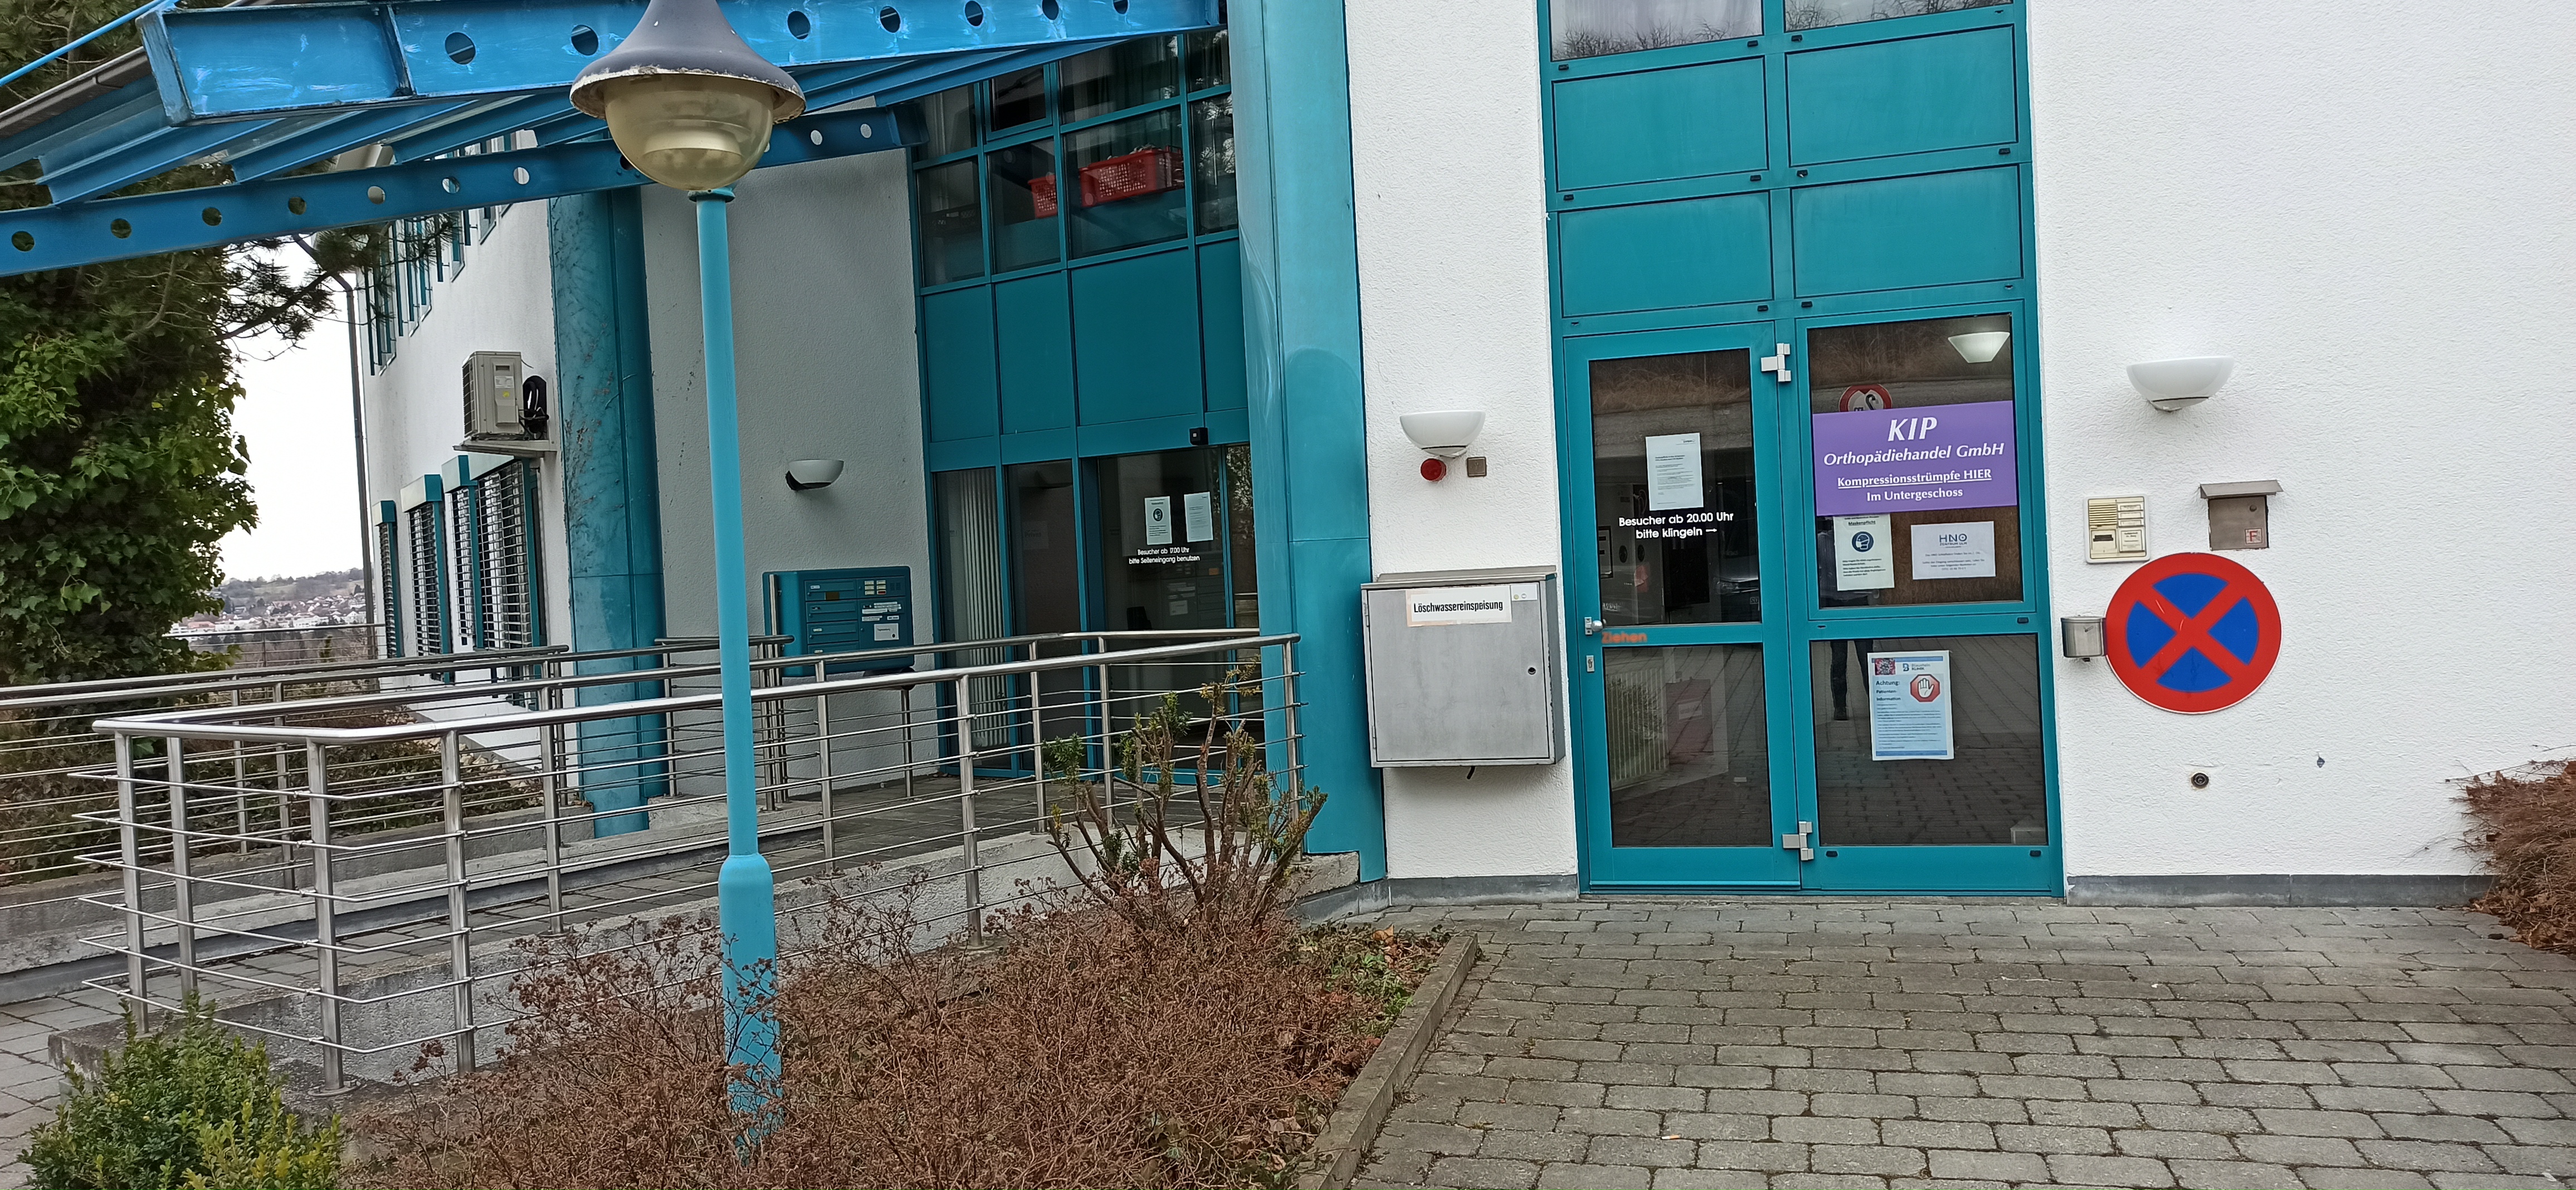 KIP Orthopädiehandel Sanitätshaus in Blaustein Eingang